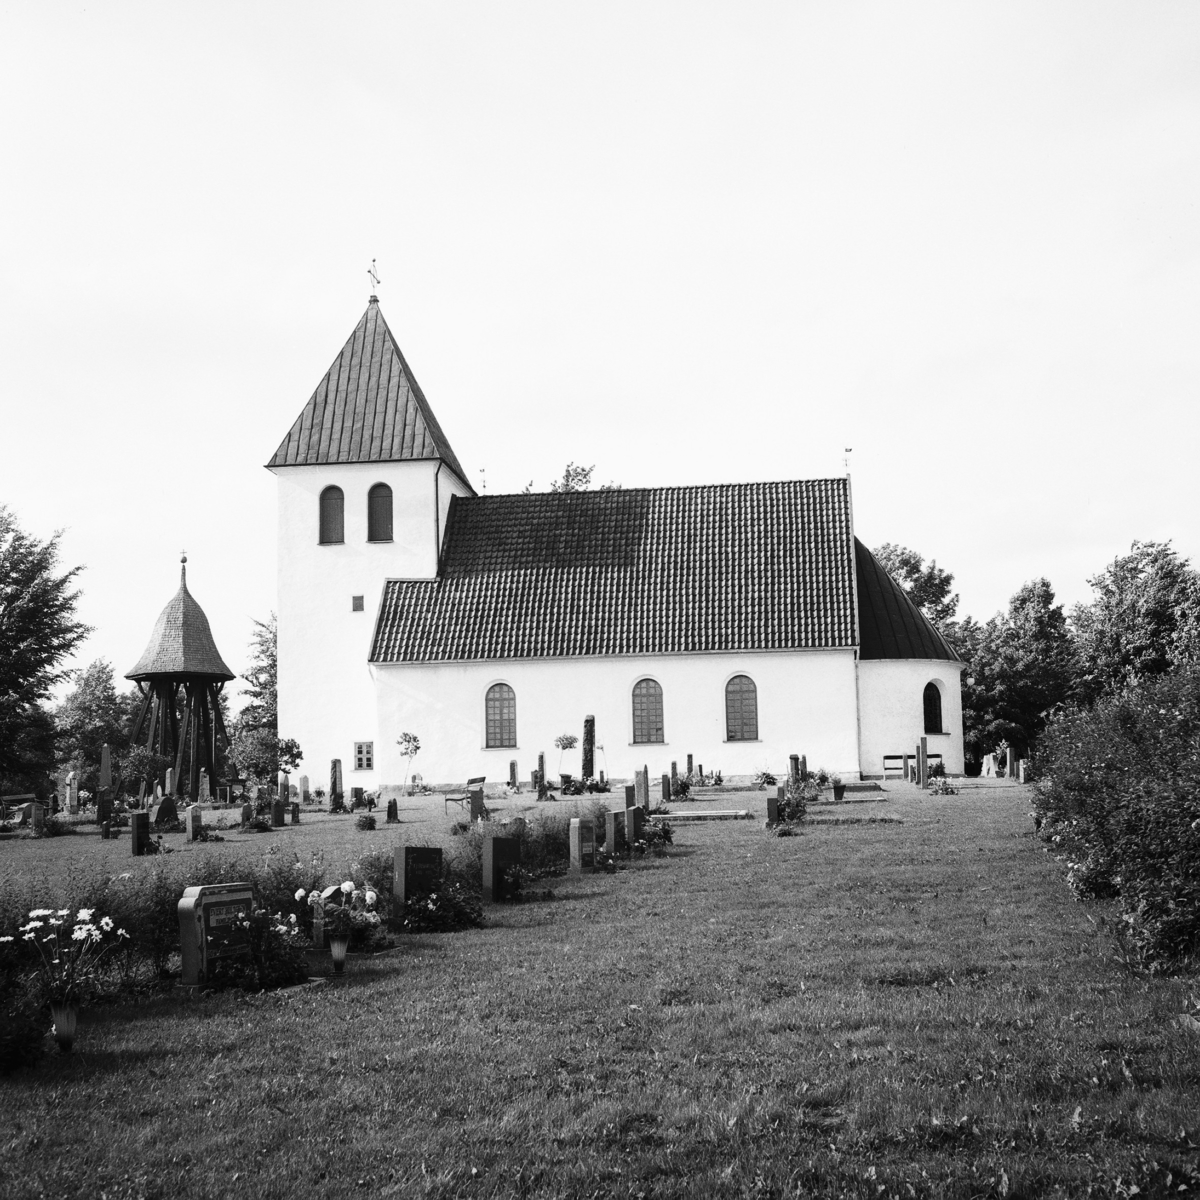 Dannike kyrka